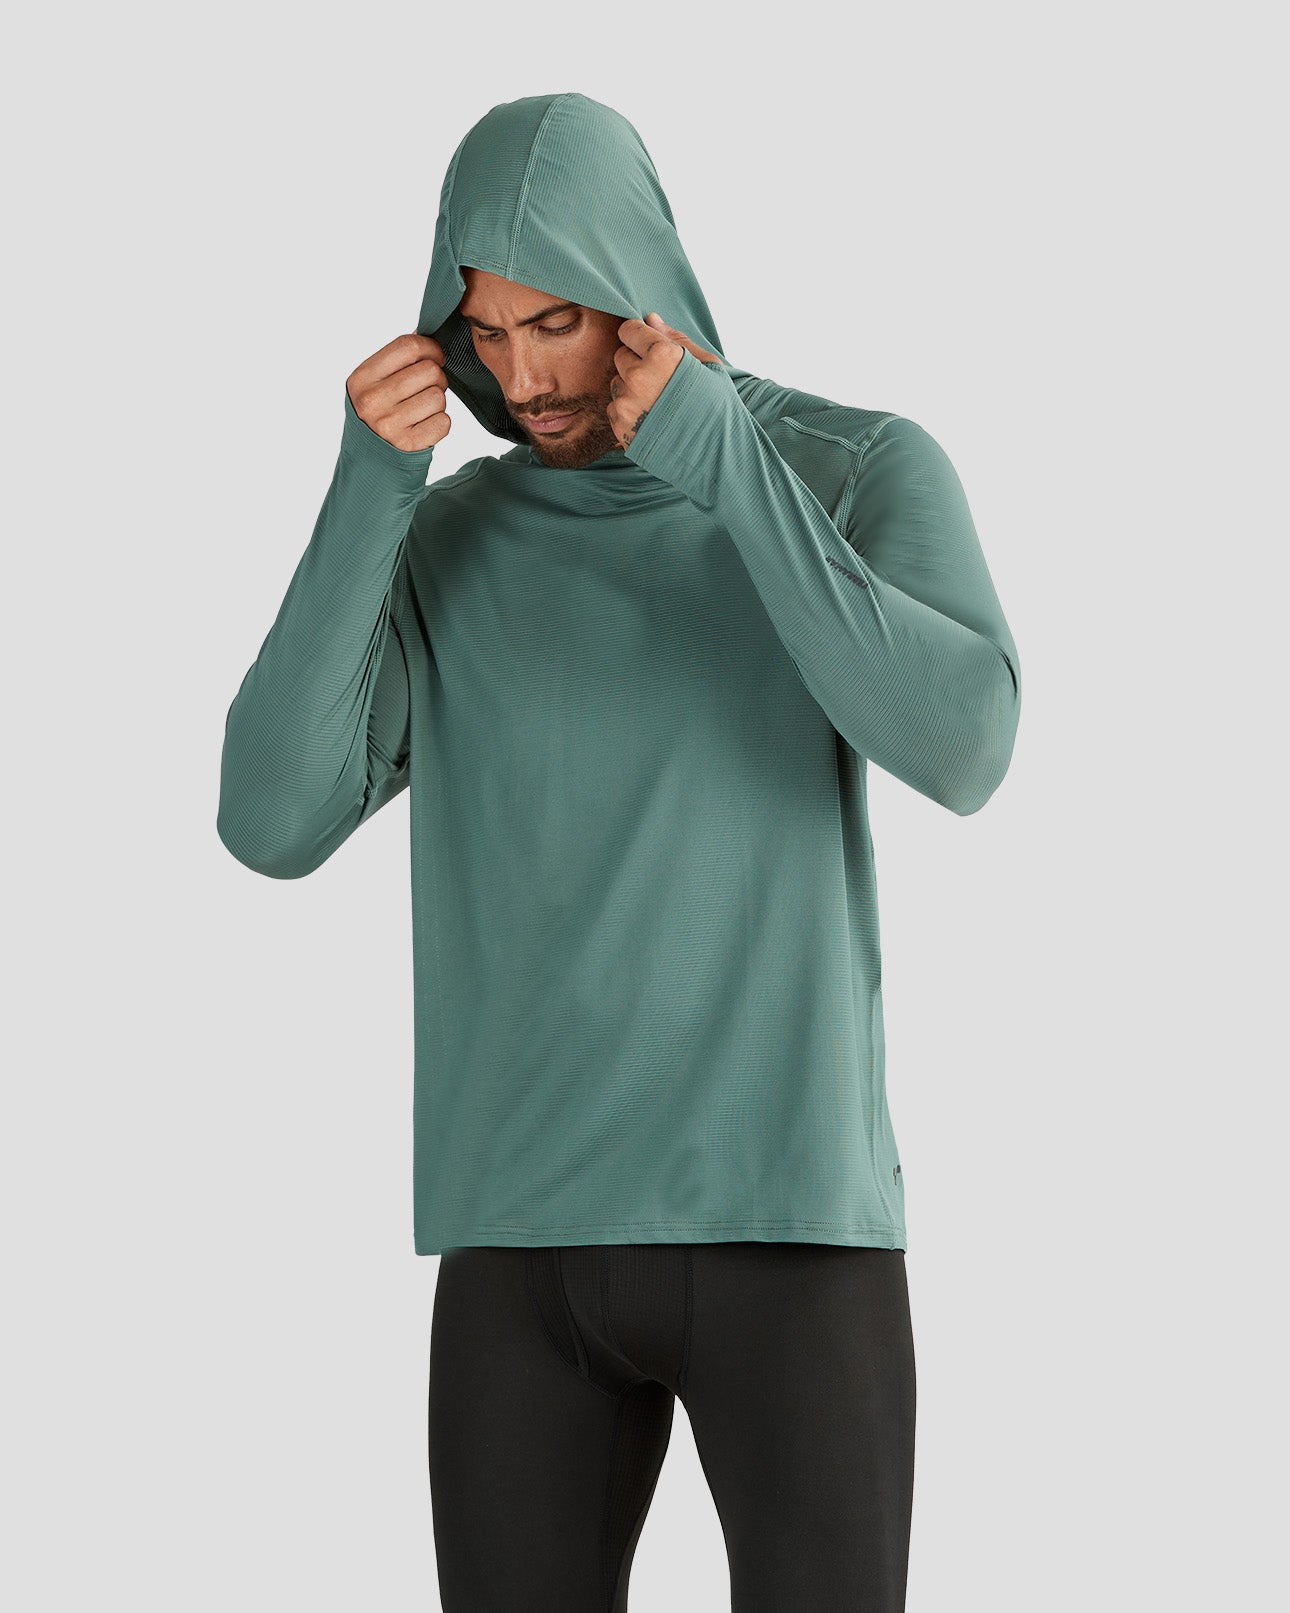 Men's Ventilator Long Sleeve Performance Hoodie | Color: Forest